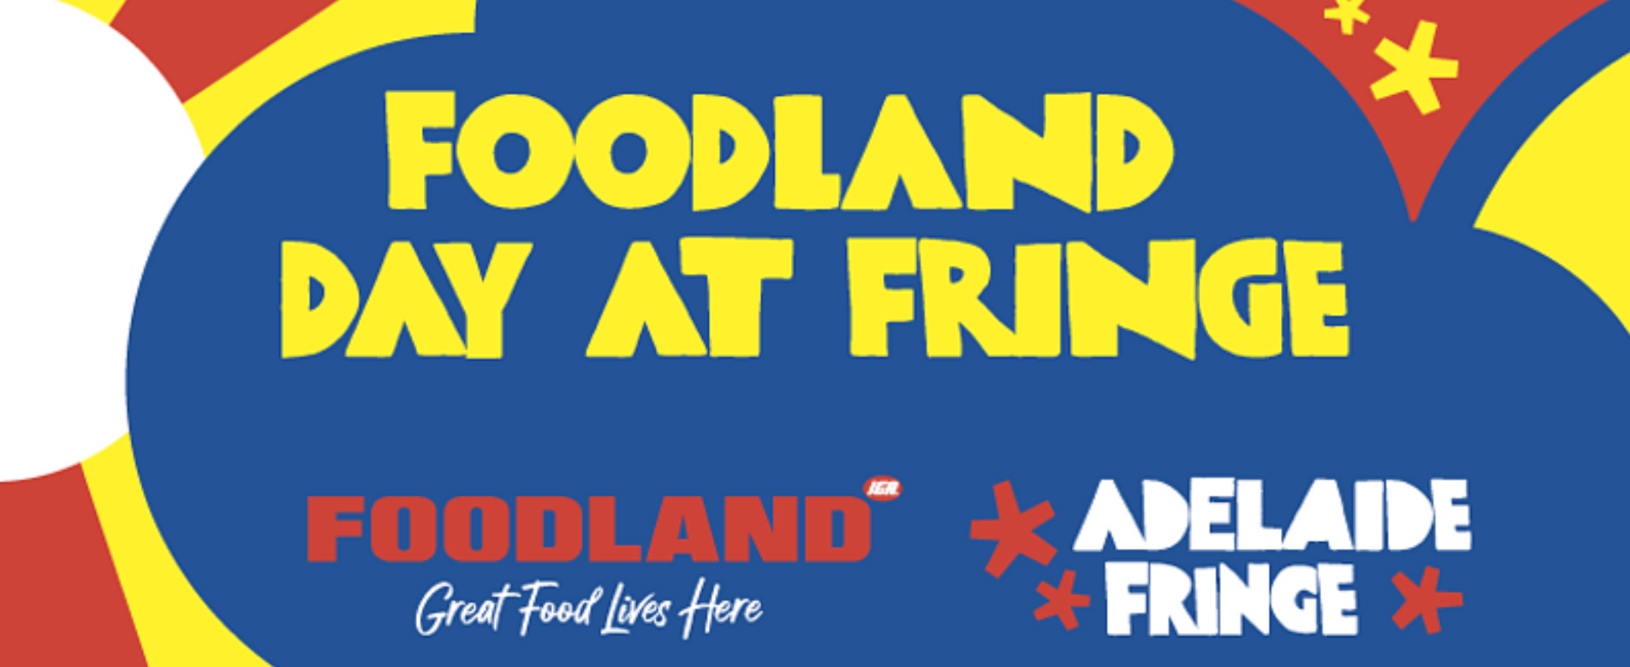 Foodland Day at Fringe